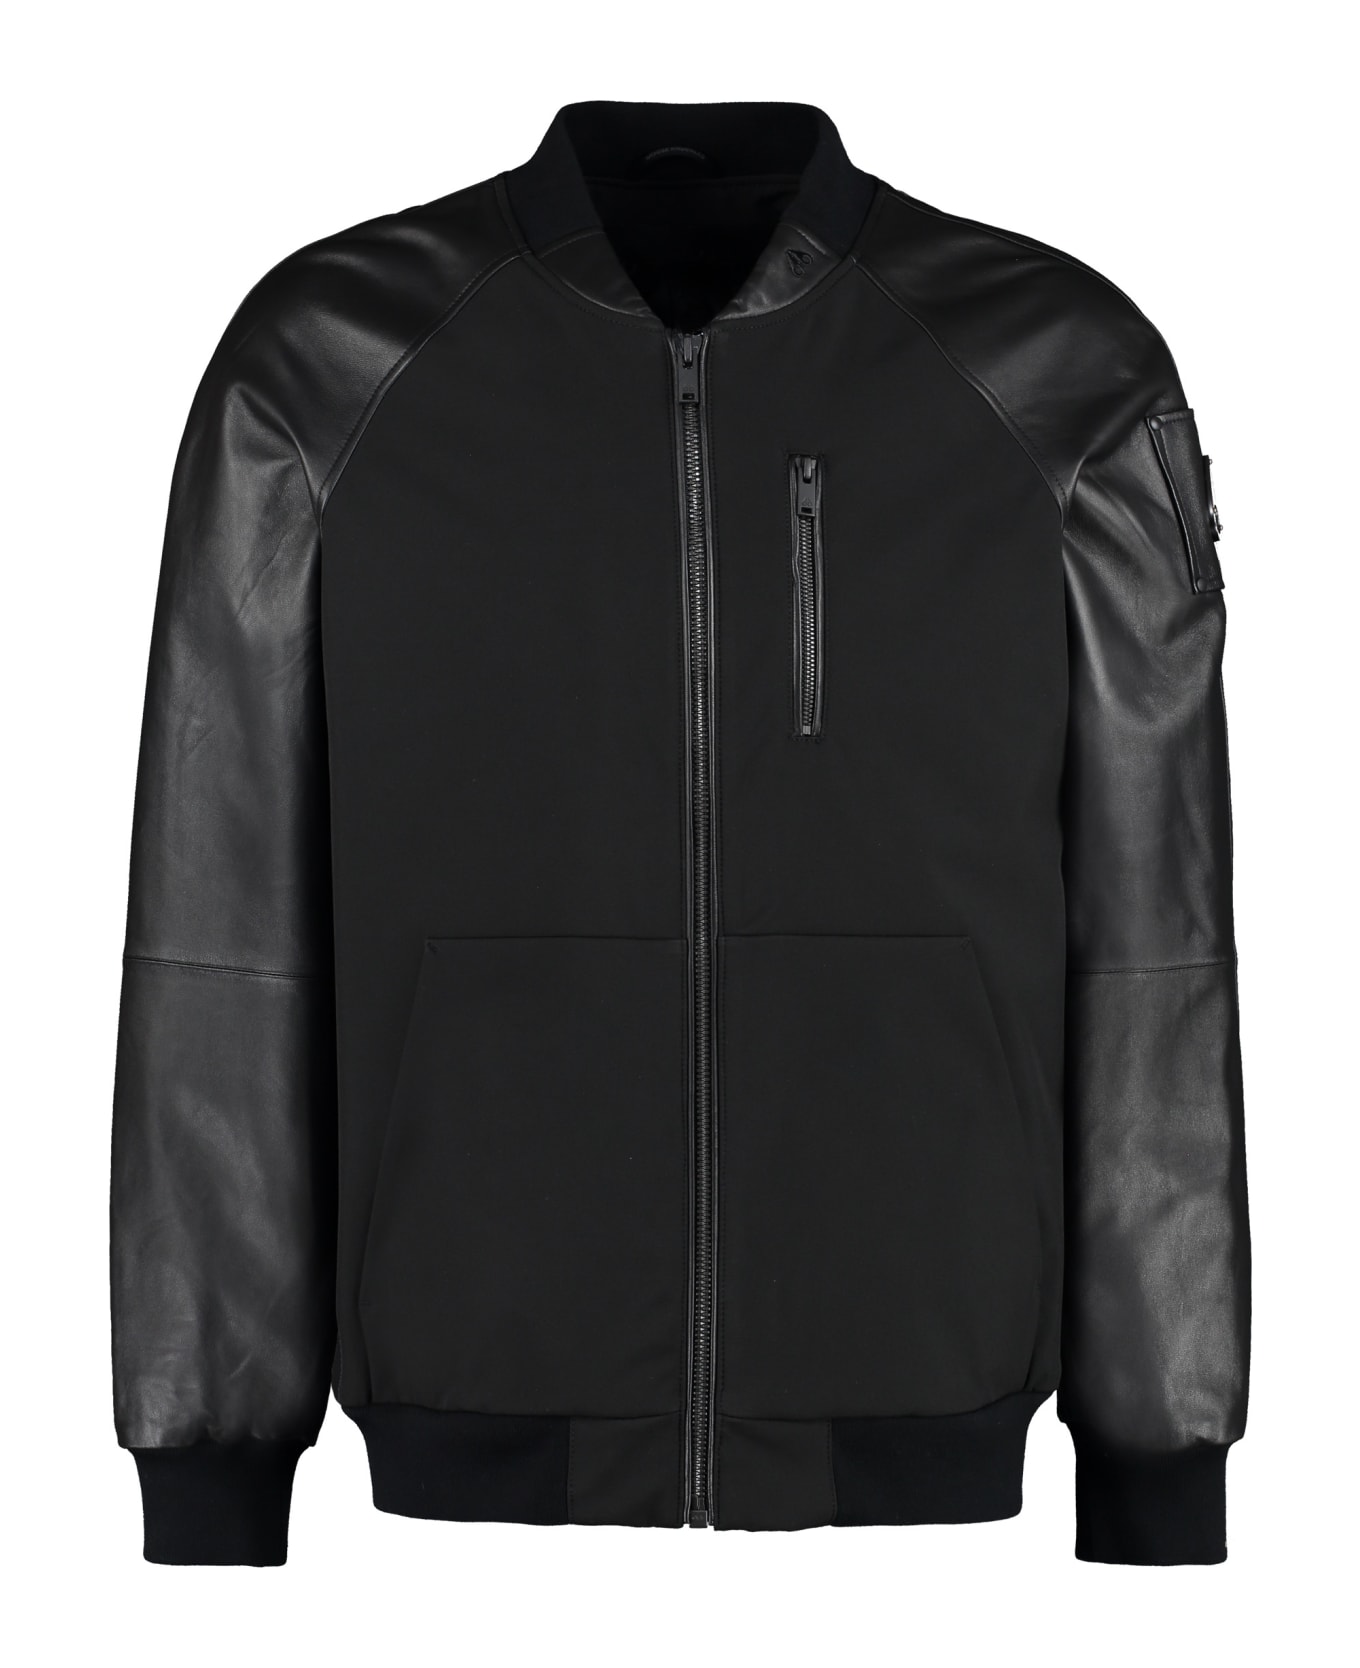 Moose Knuckles Nylon Bomber Jacket With Leather Details - black